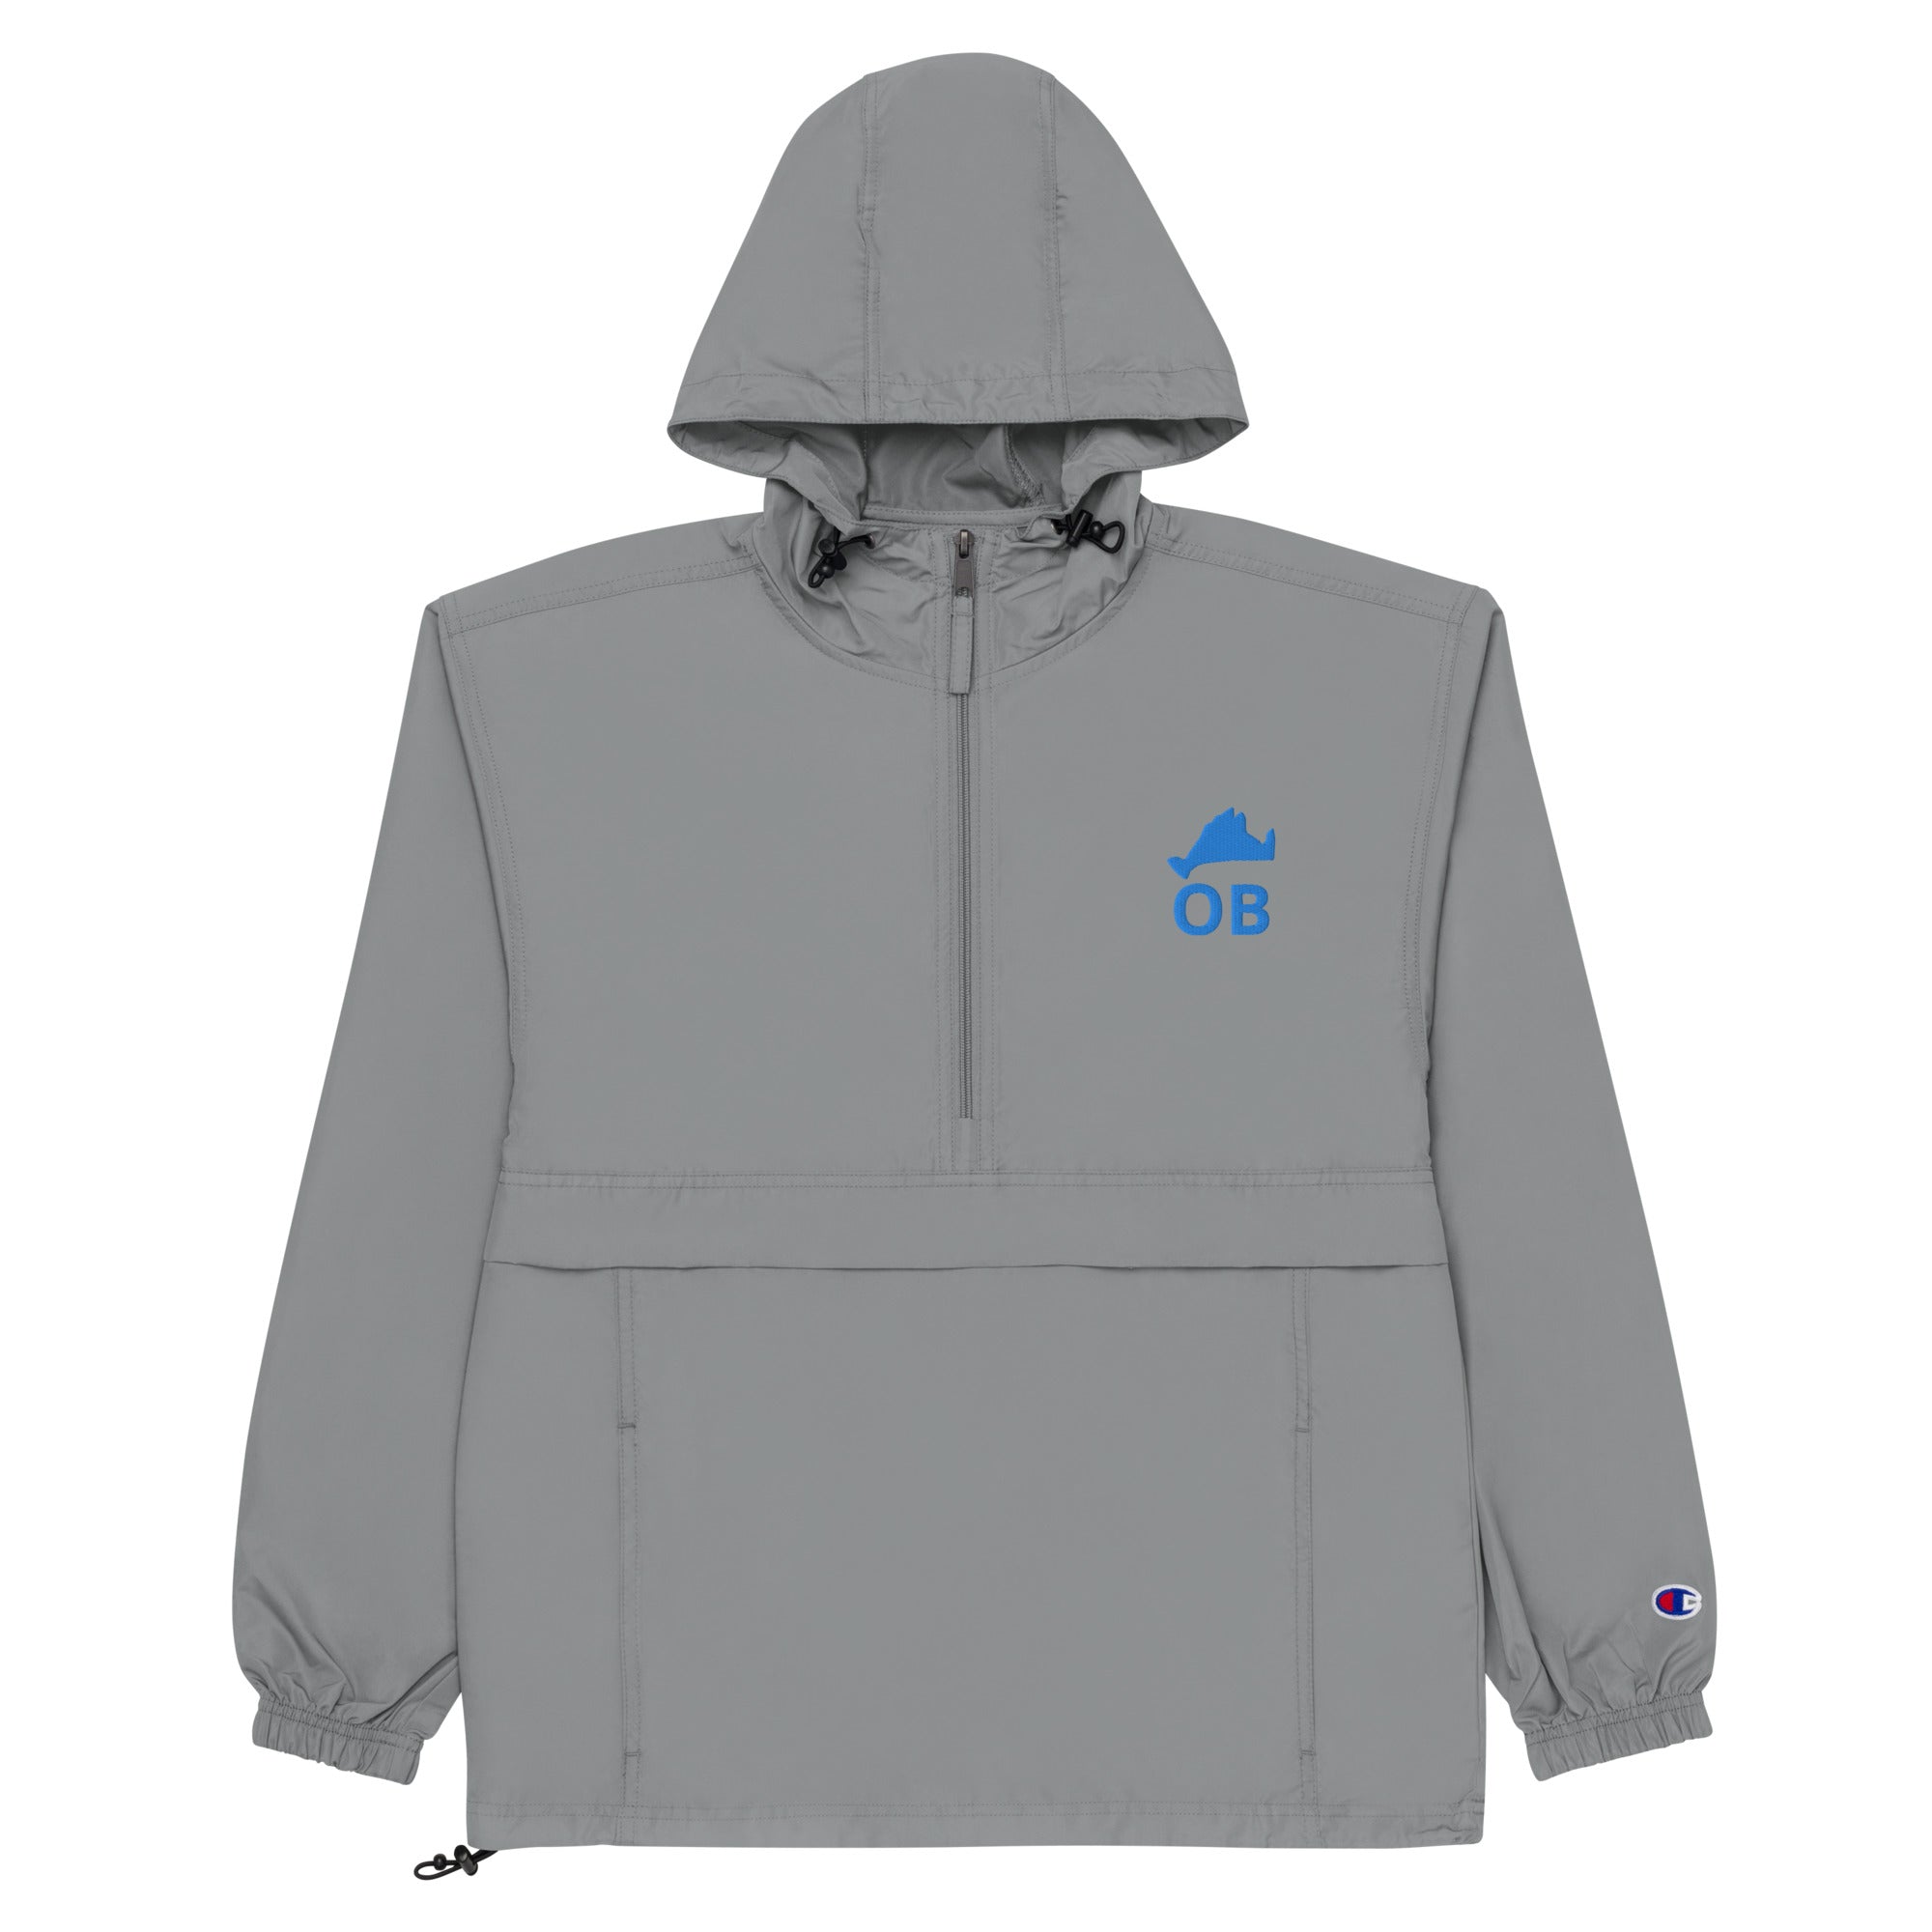 Aqua/Teal OB/Island Embroidered Champion Packable Jacket